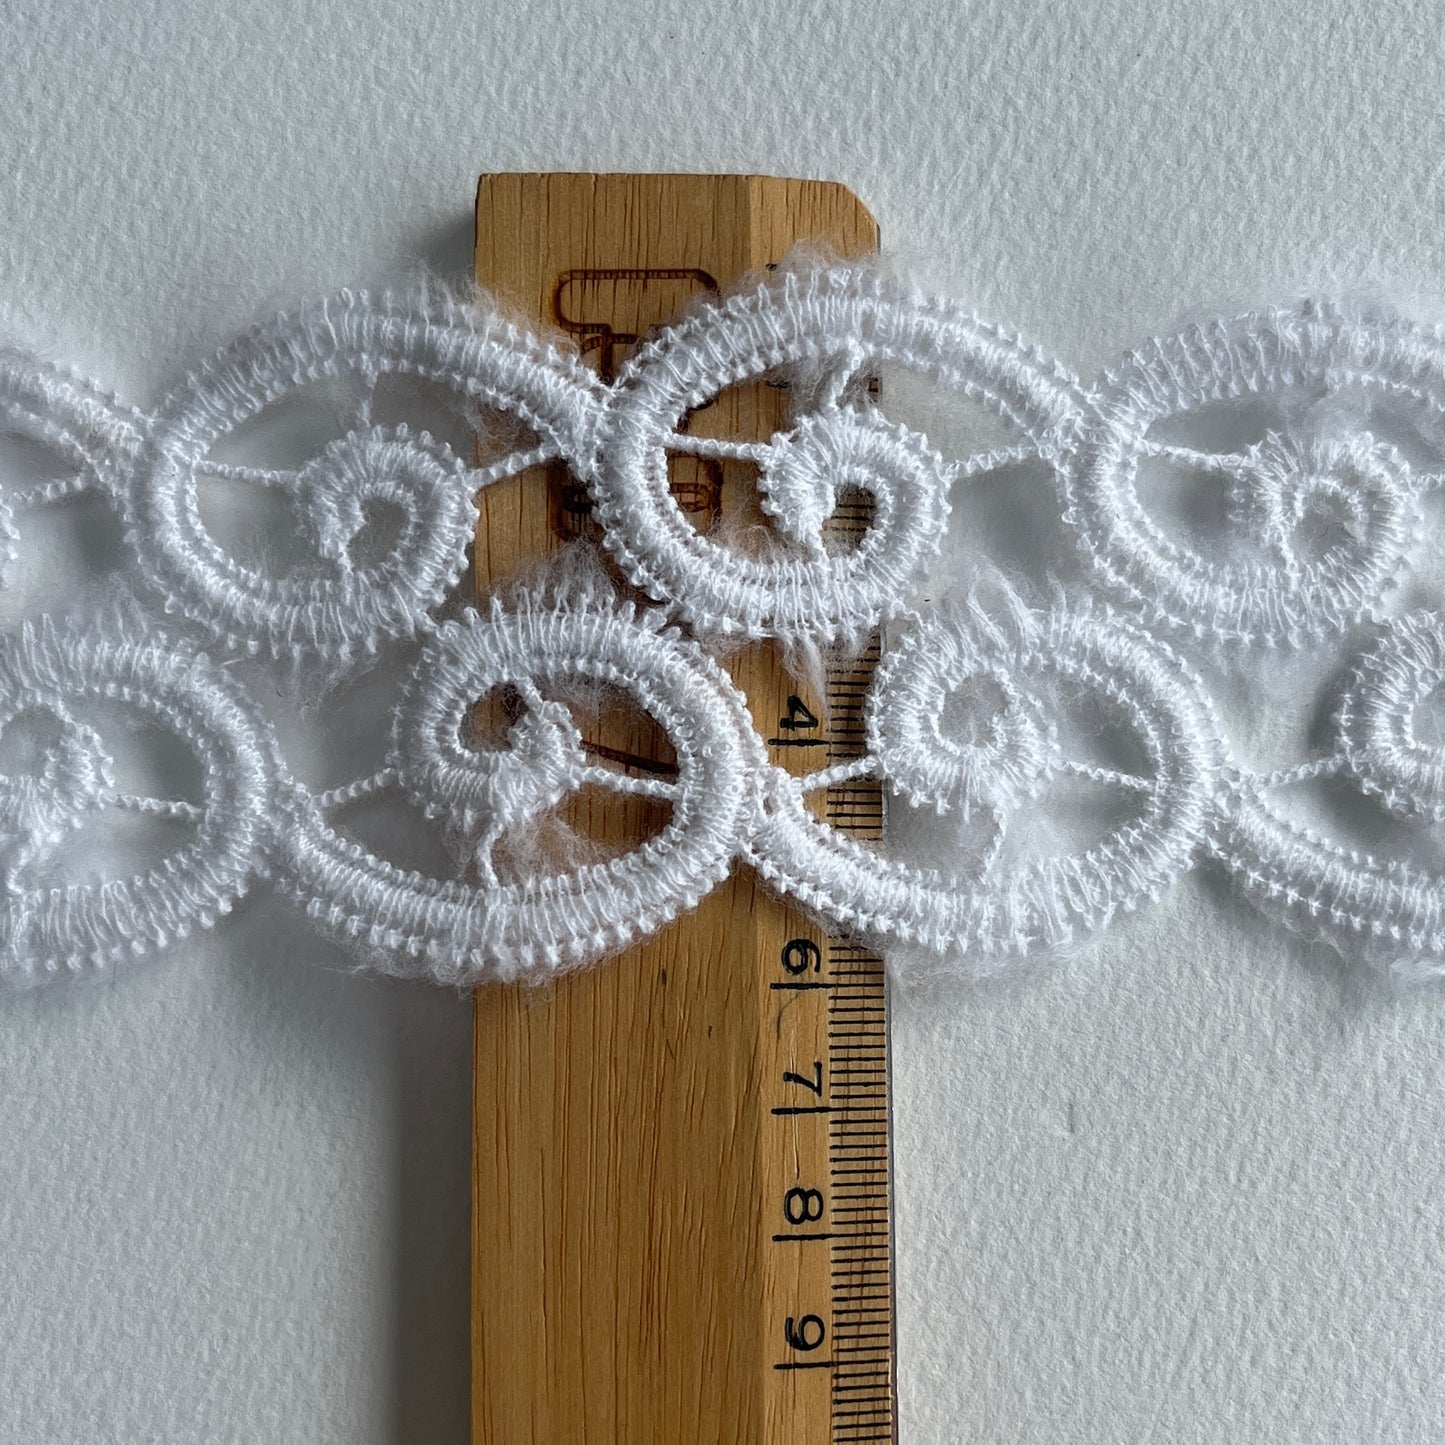 Off-white lace border trim with delicate scroll design and scalloped edge.